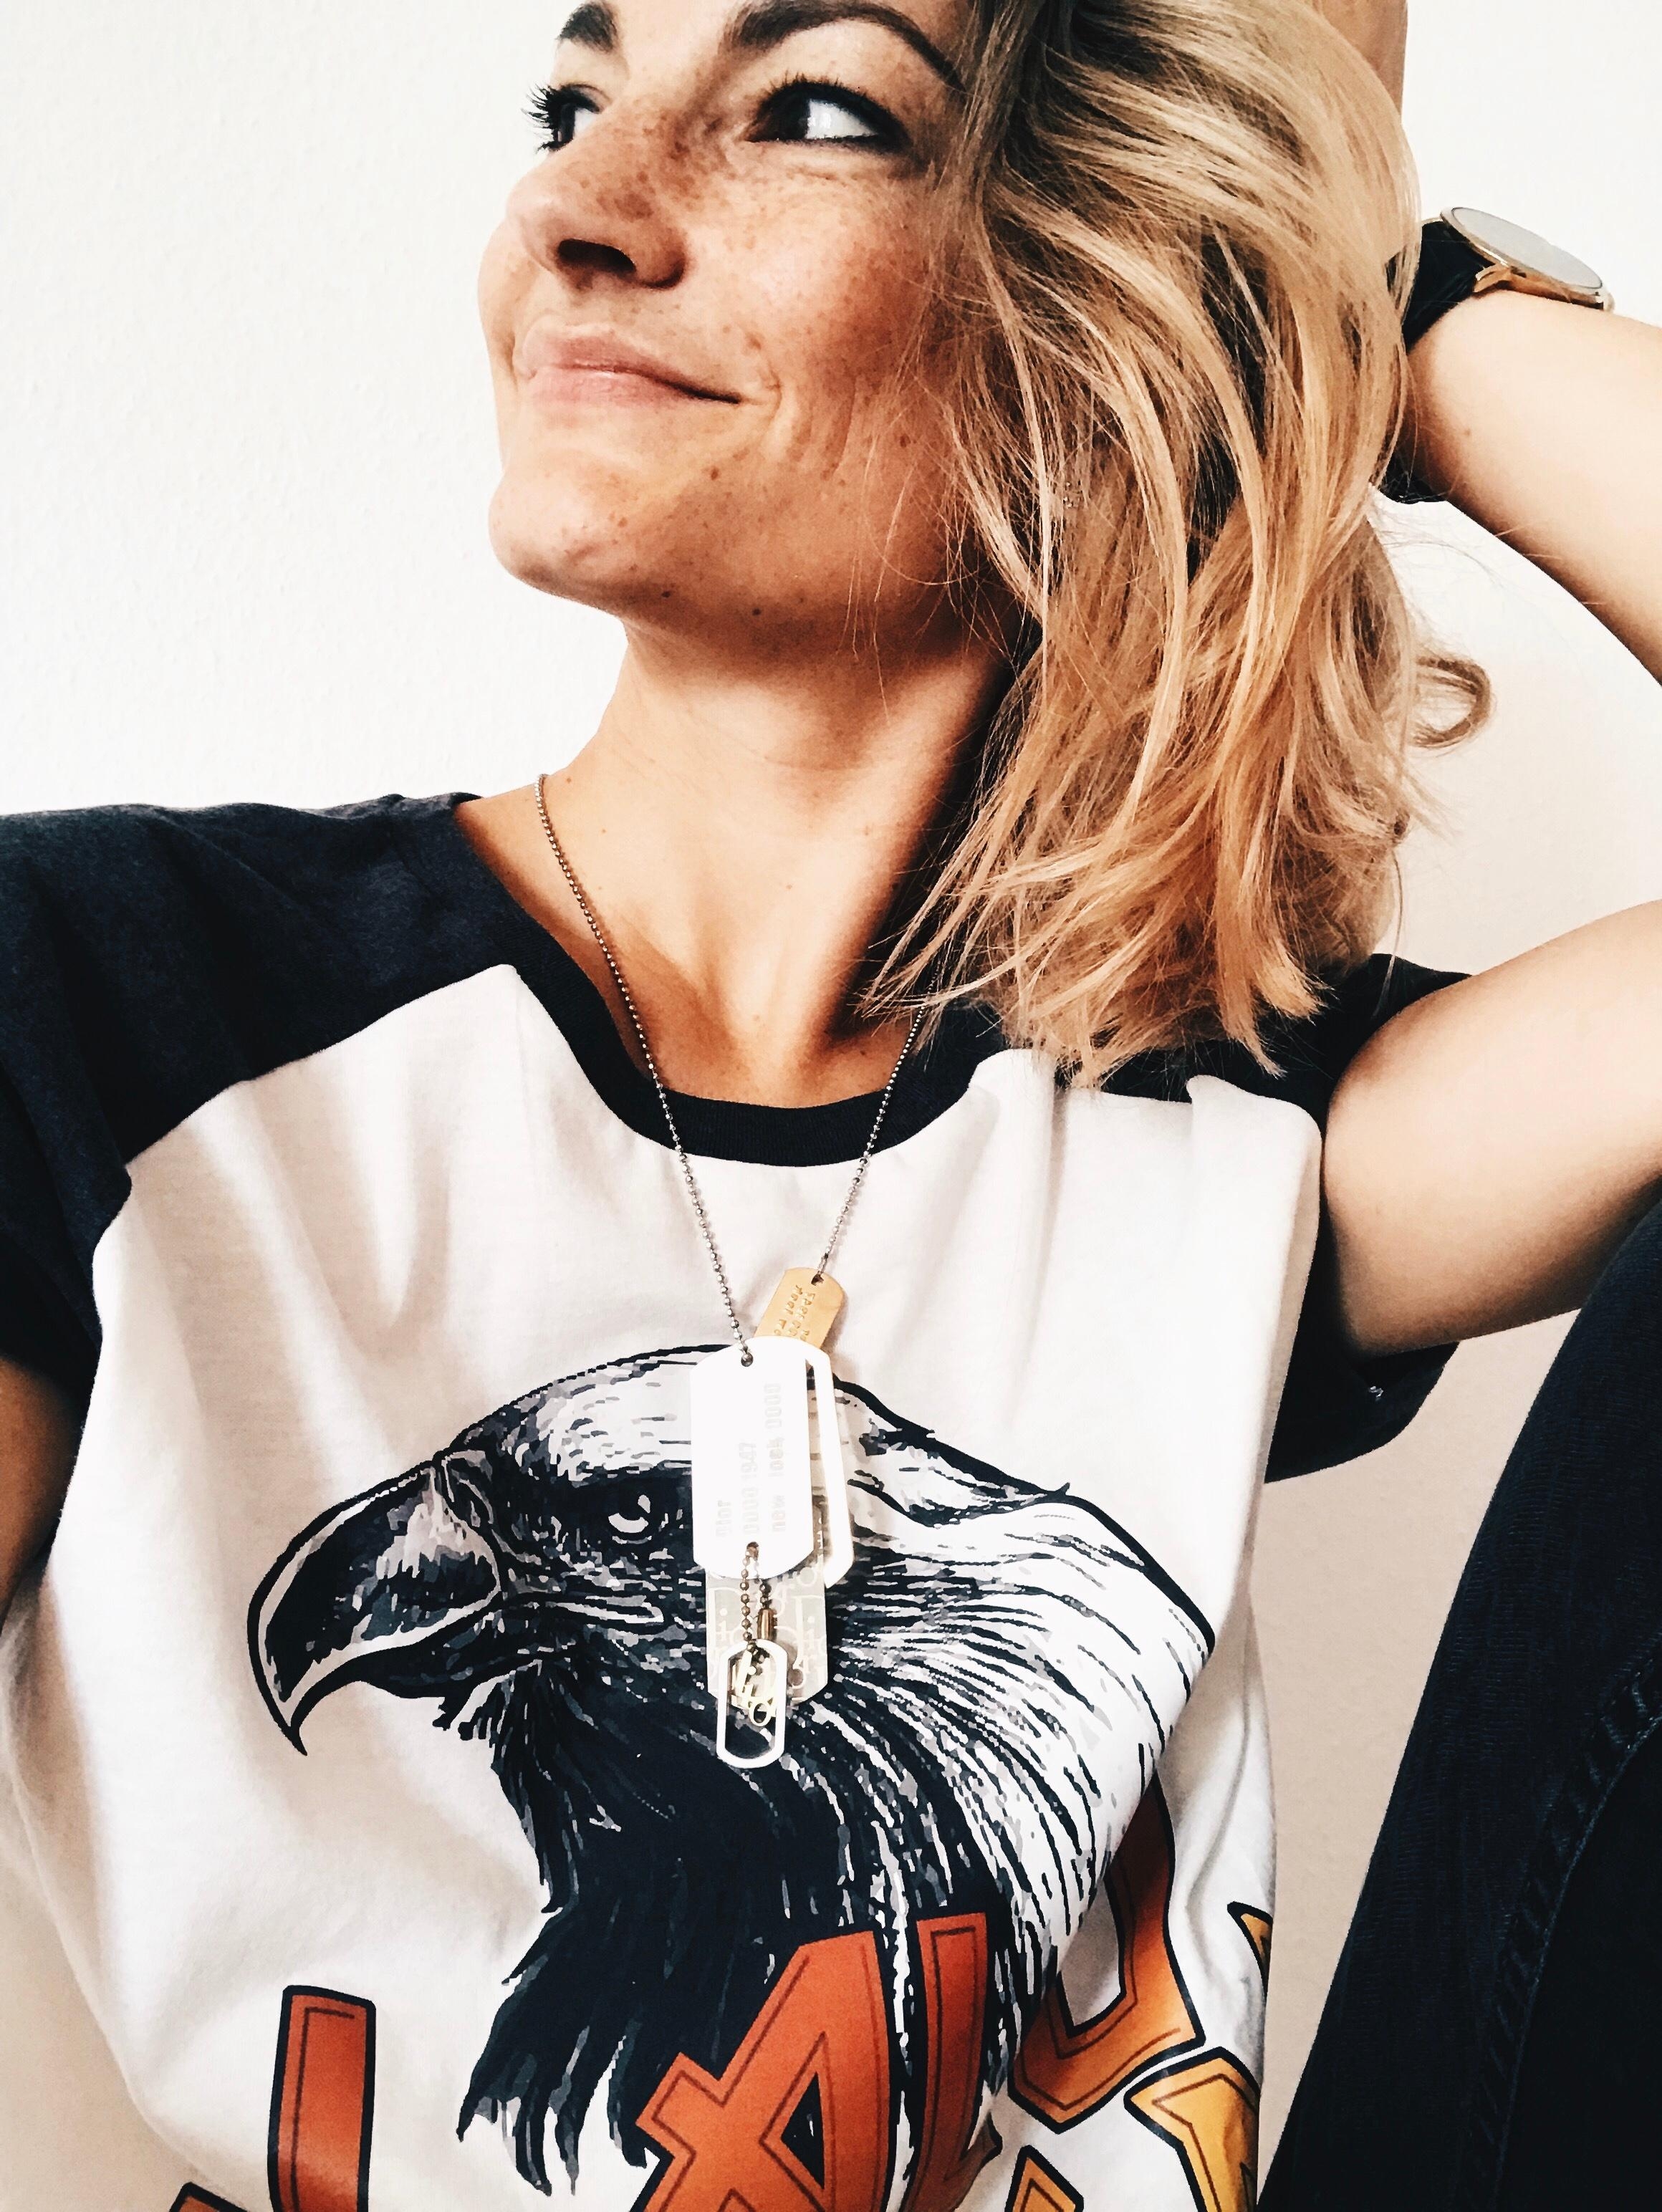 Lieblingsshirt. 🖤
#shirtoftheday #ootd #fashion #laludesign #selfie #tshirt #outfit #mode #statementshirt